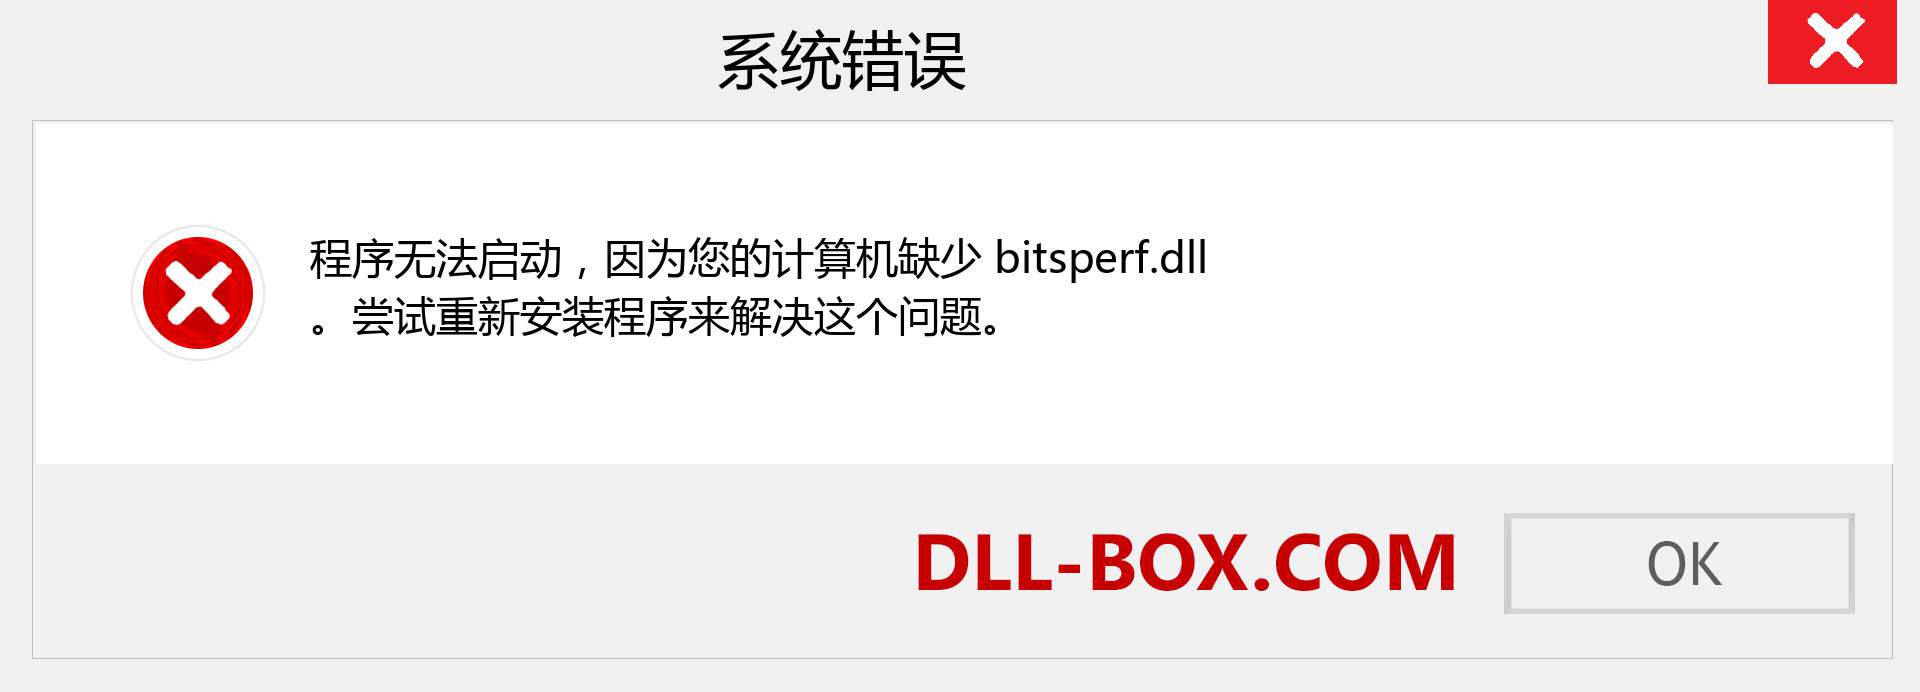 bitsperf.dll 文件丢失？。 适用于 Windows 7、8、10 的下载 - 修复 Windows、照片、图像上的 bitsperf dll 丢失错误